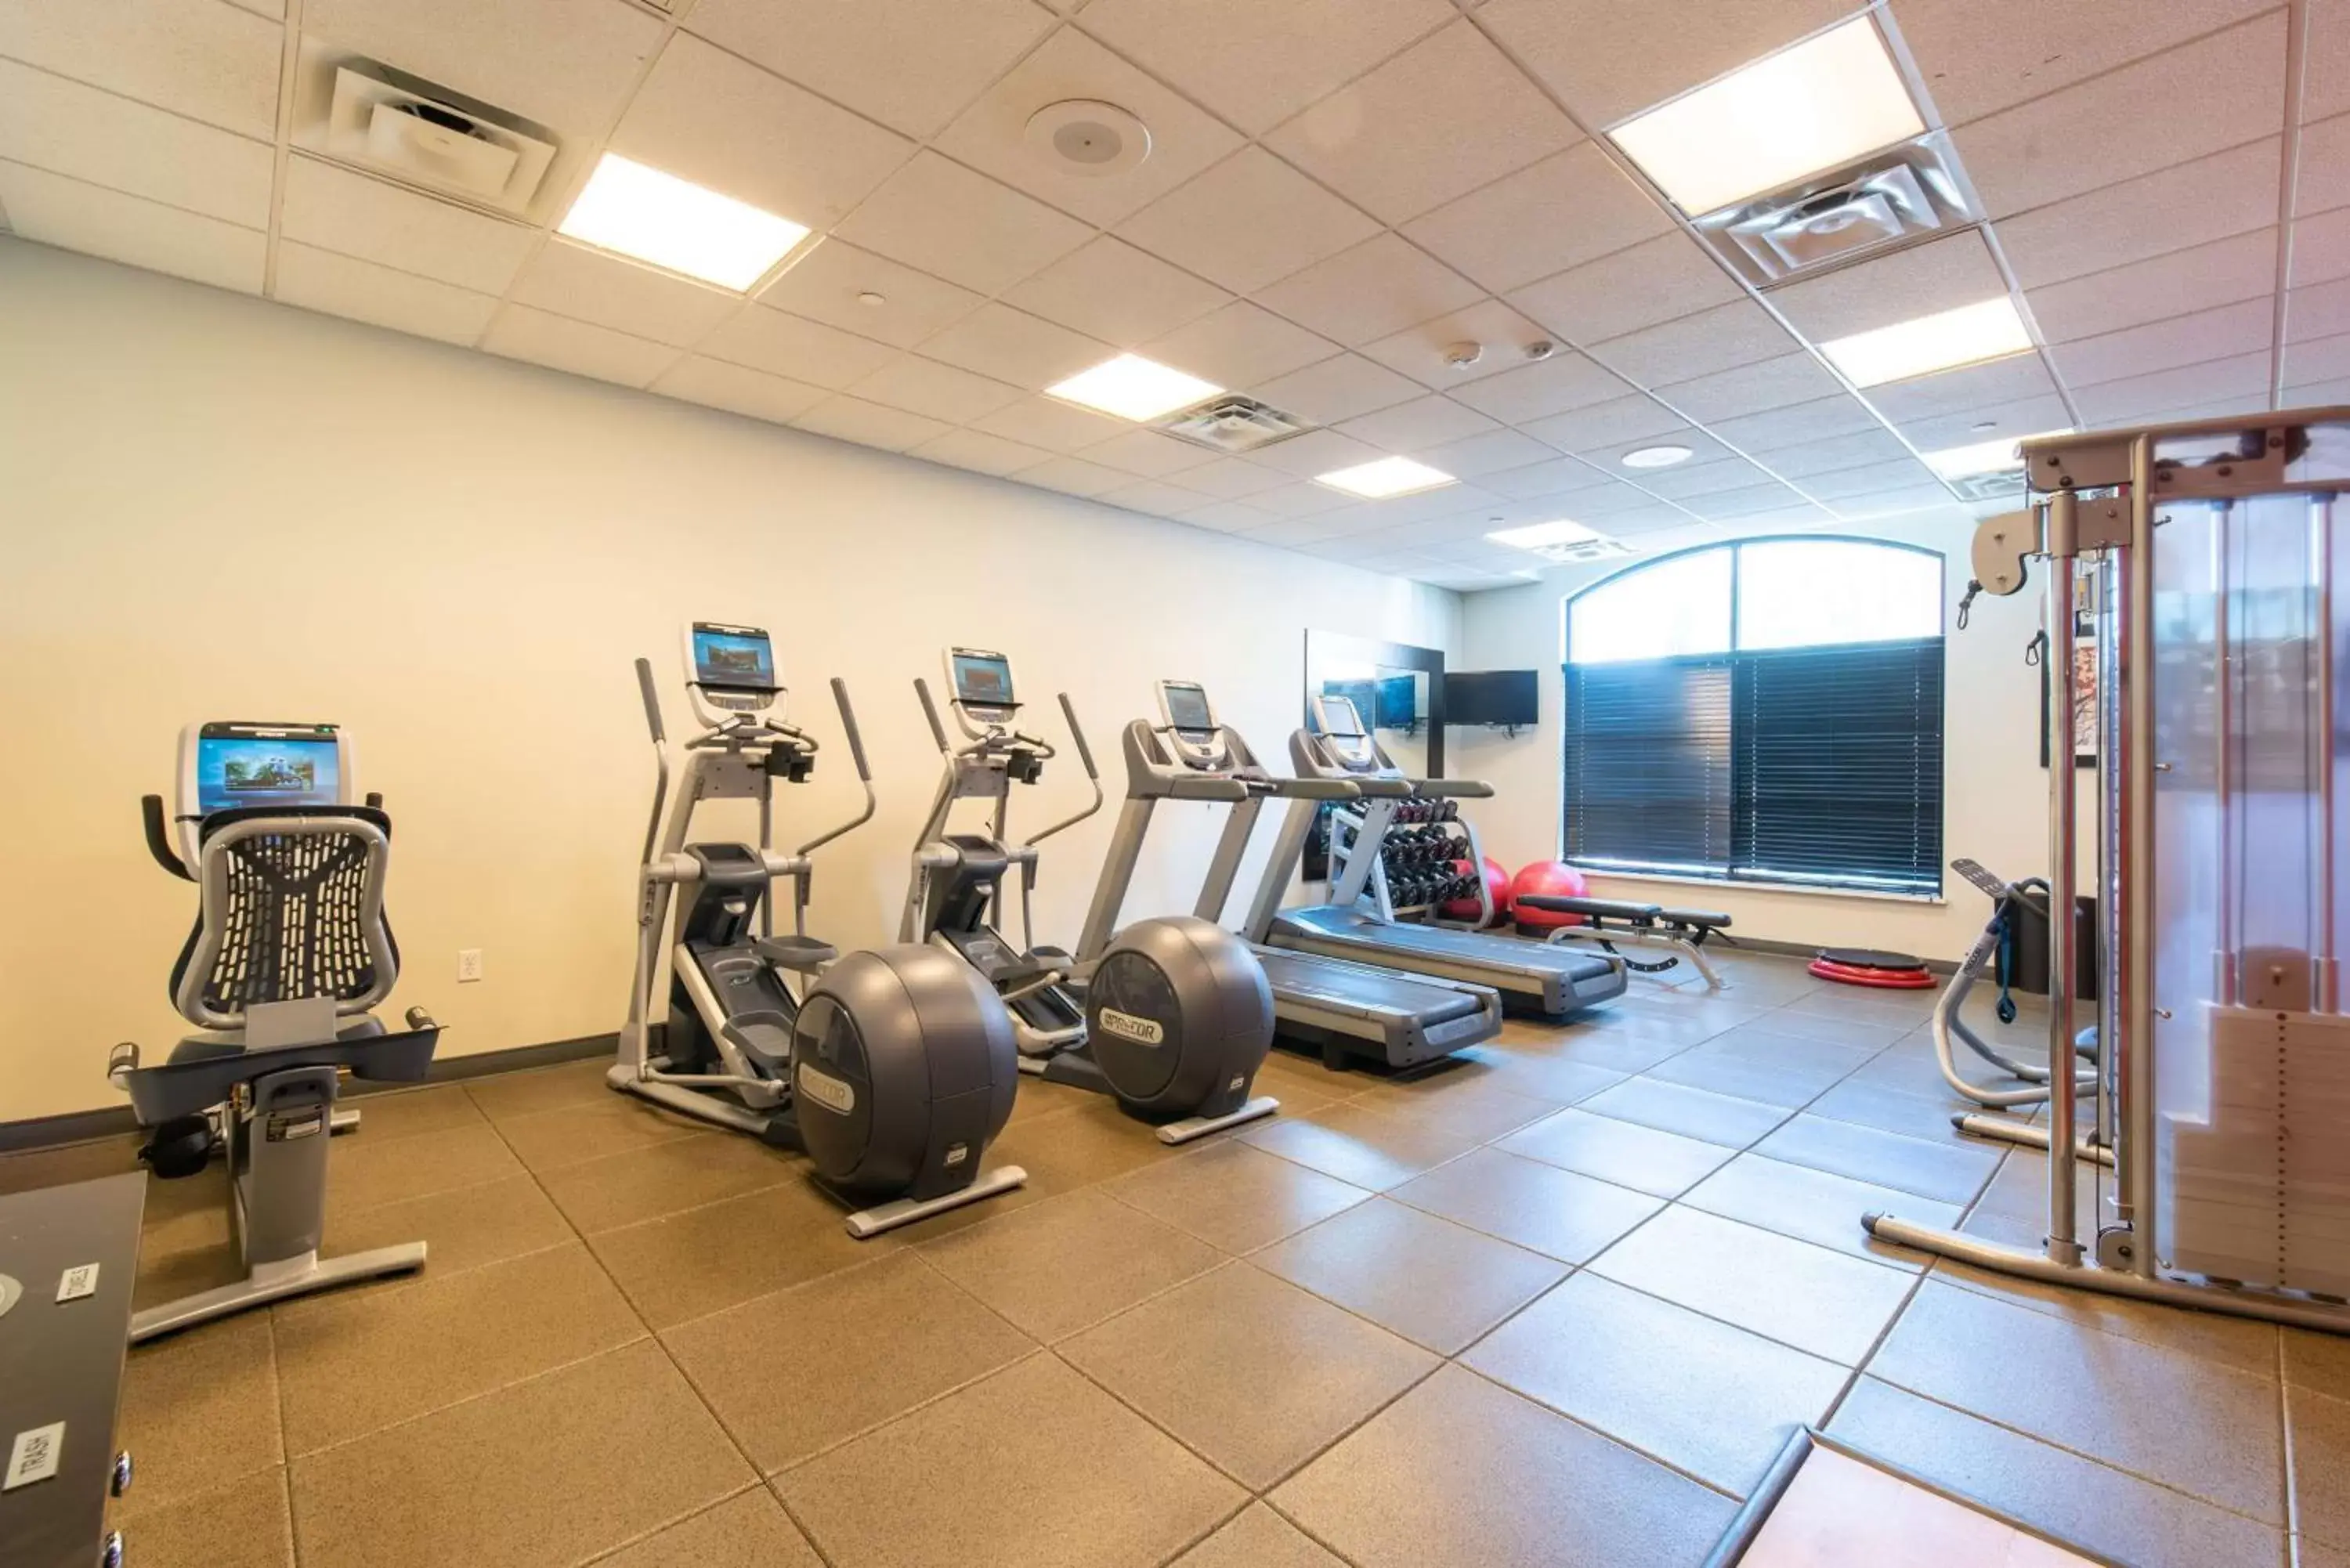 Fitness centre/facilities, Fitness Center/Facilities in Hilton Garden Inn Ogden